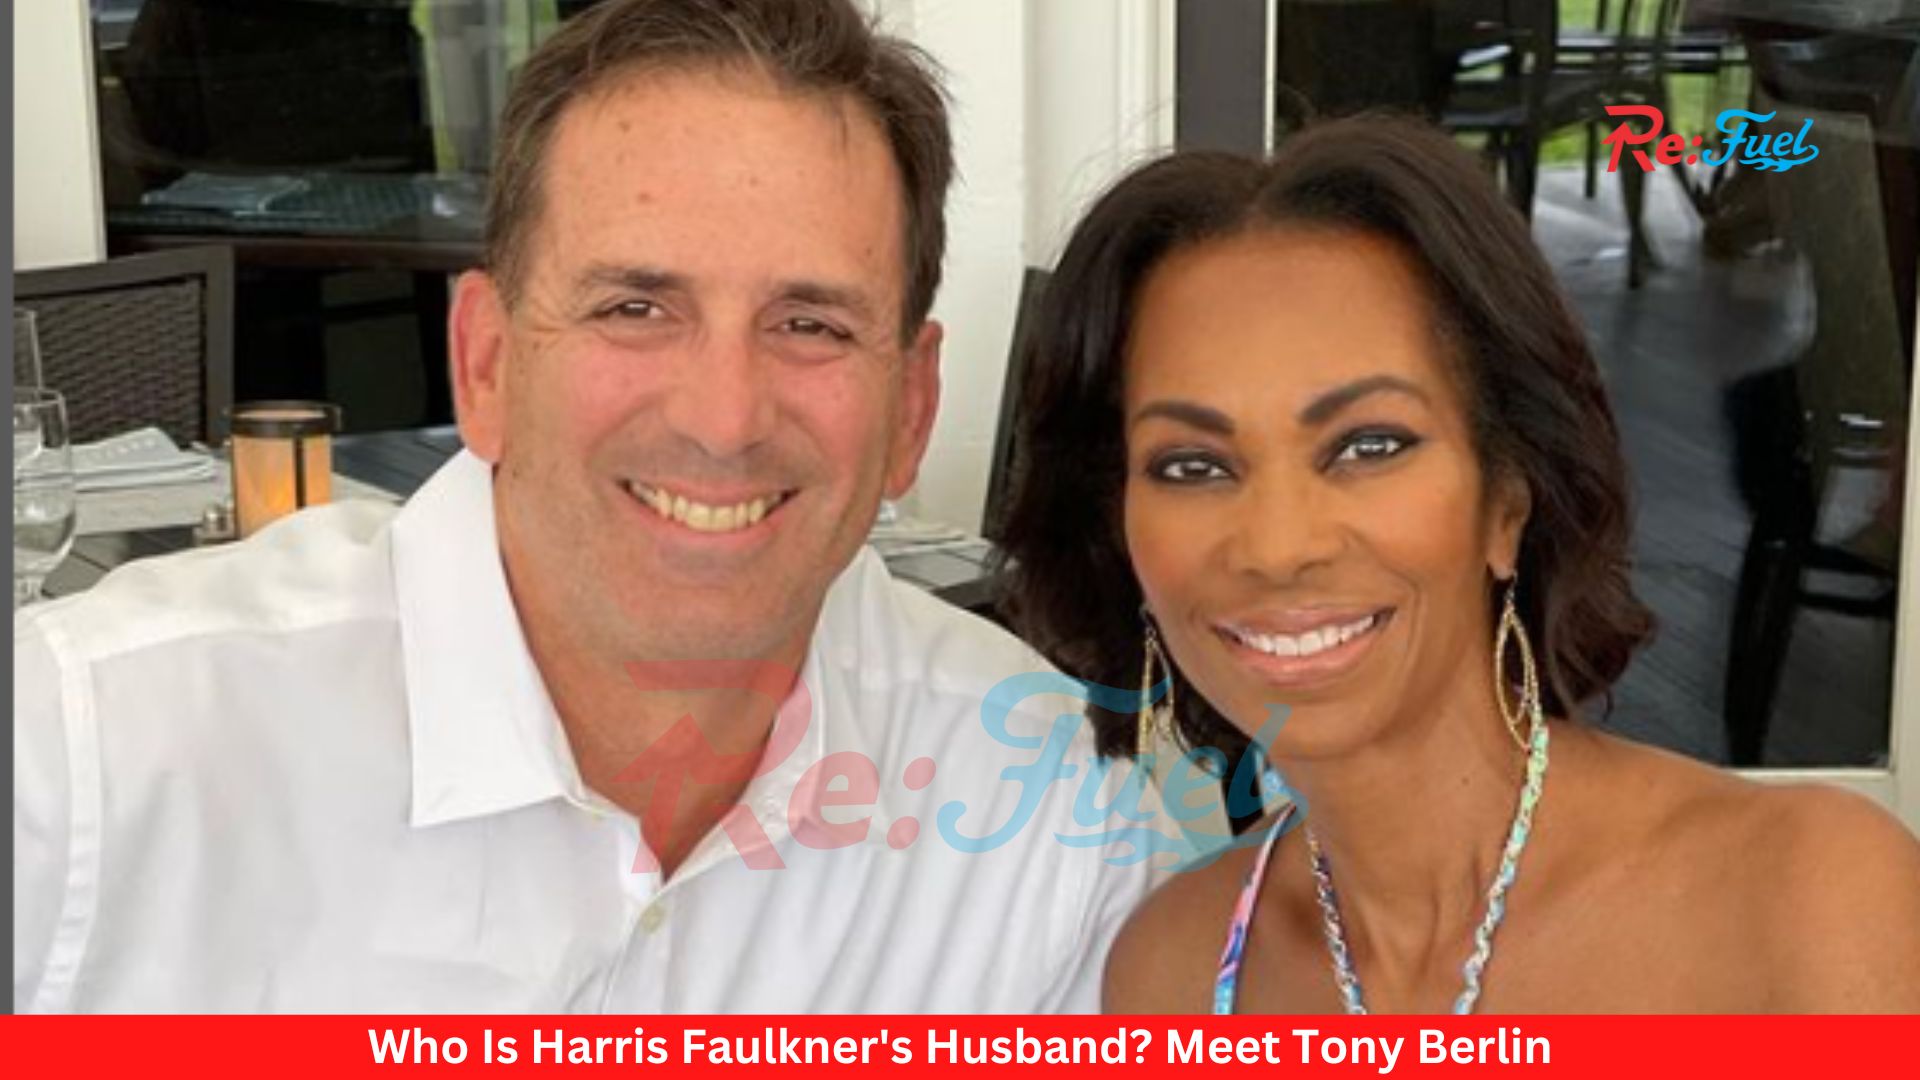 Who Is Harris Faulkner's Husband? Meet Tony Berlin